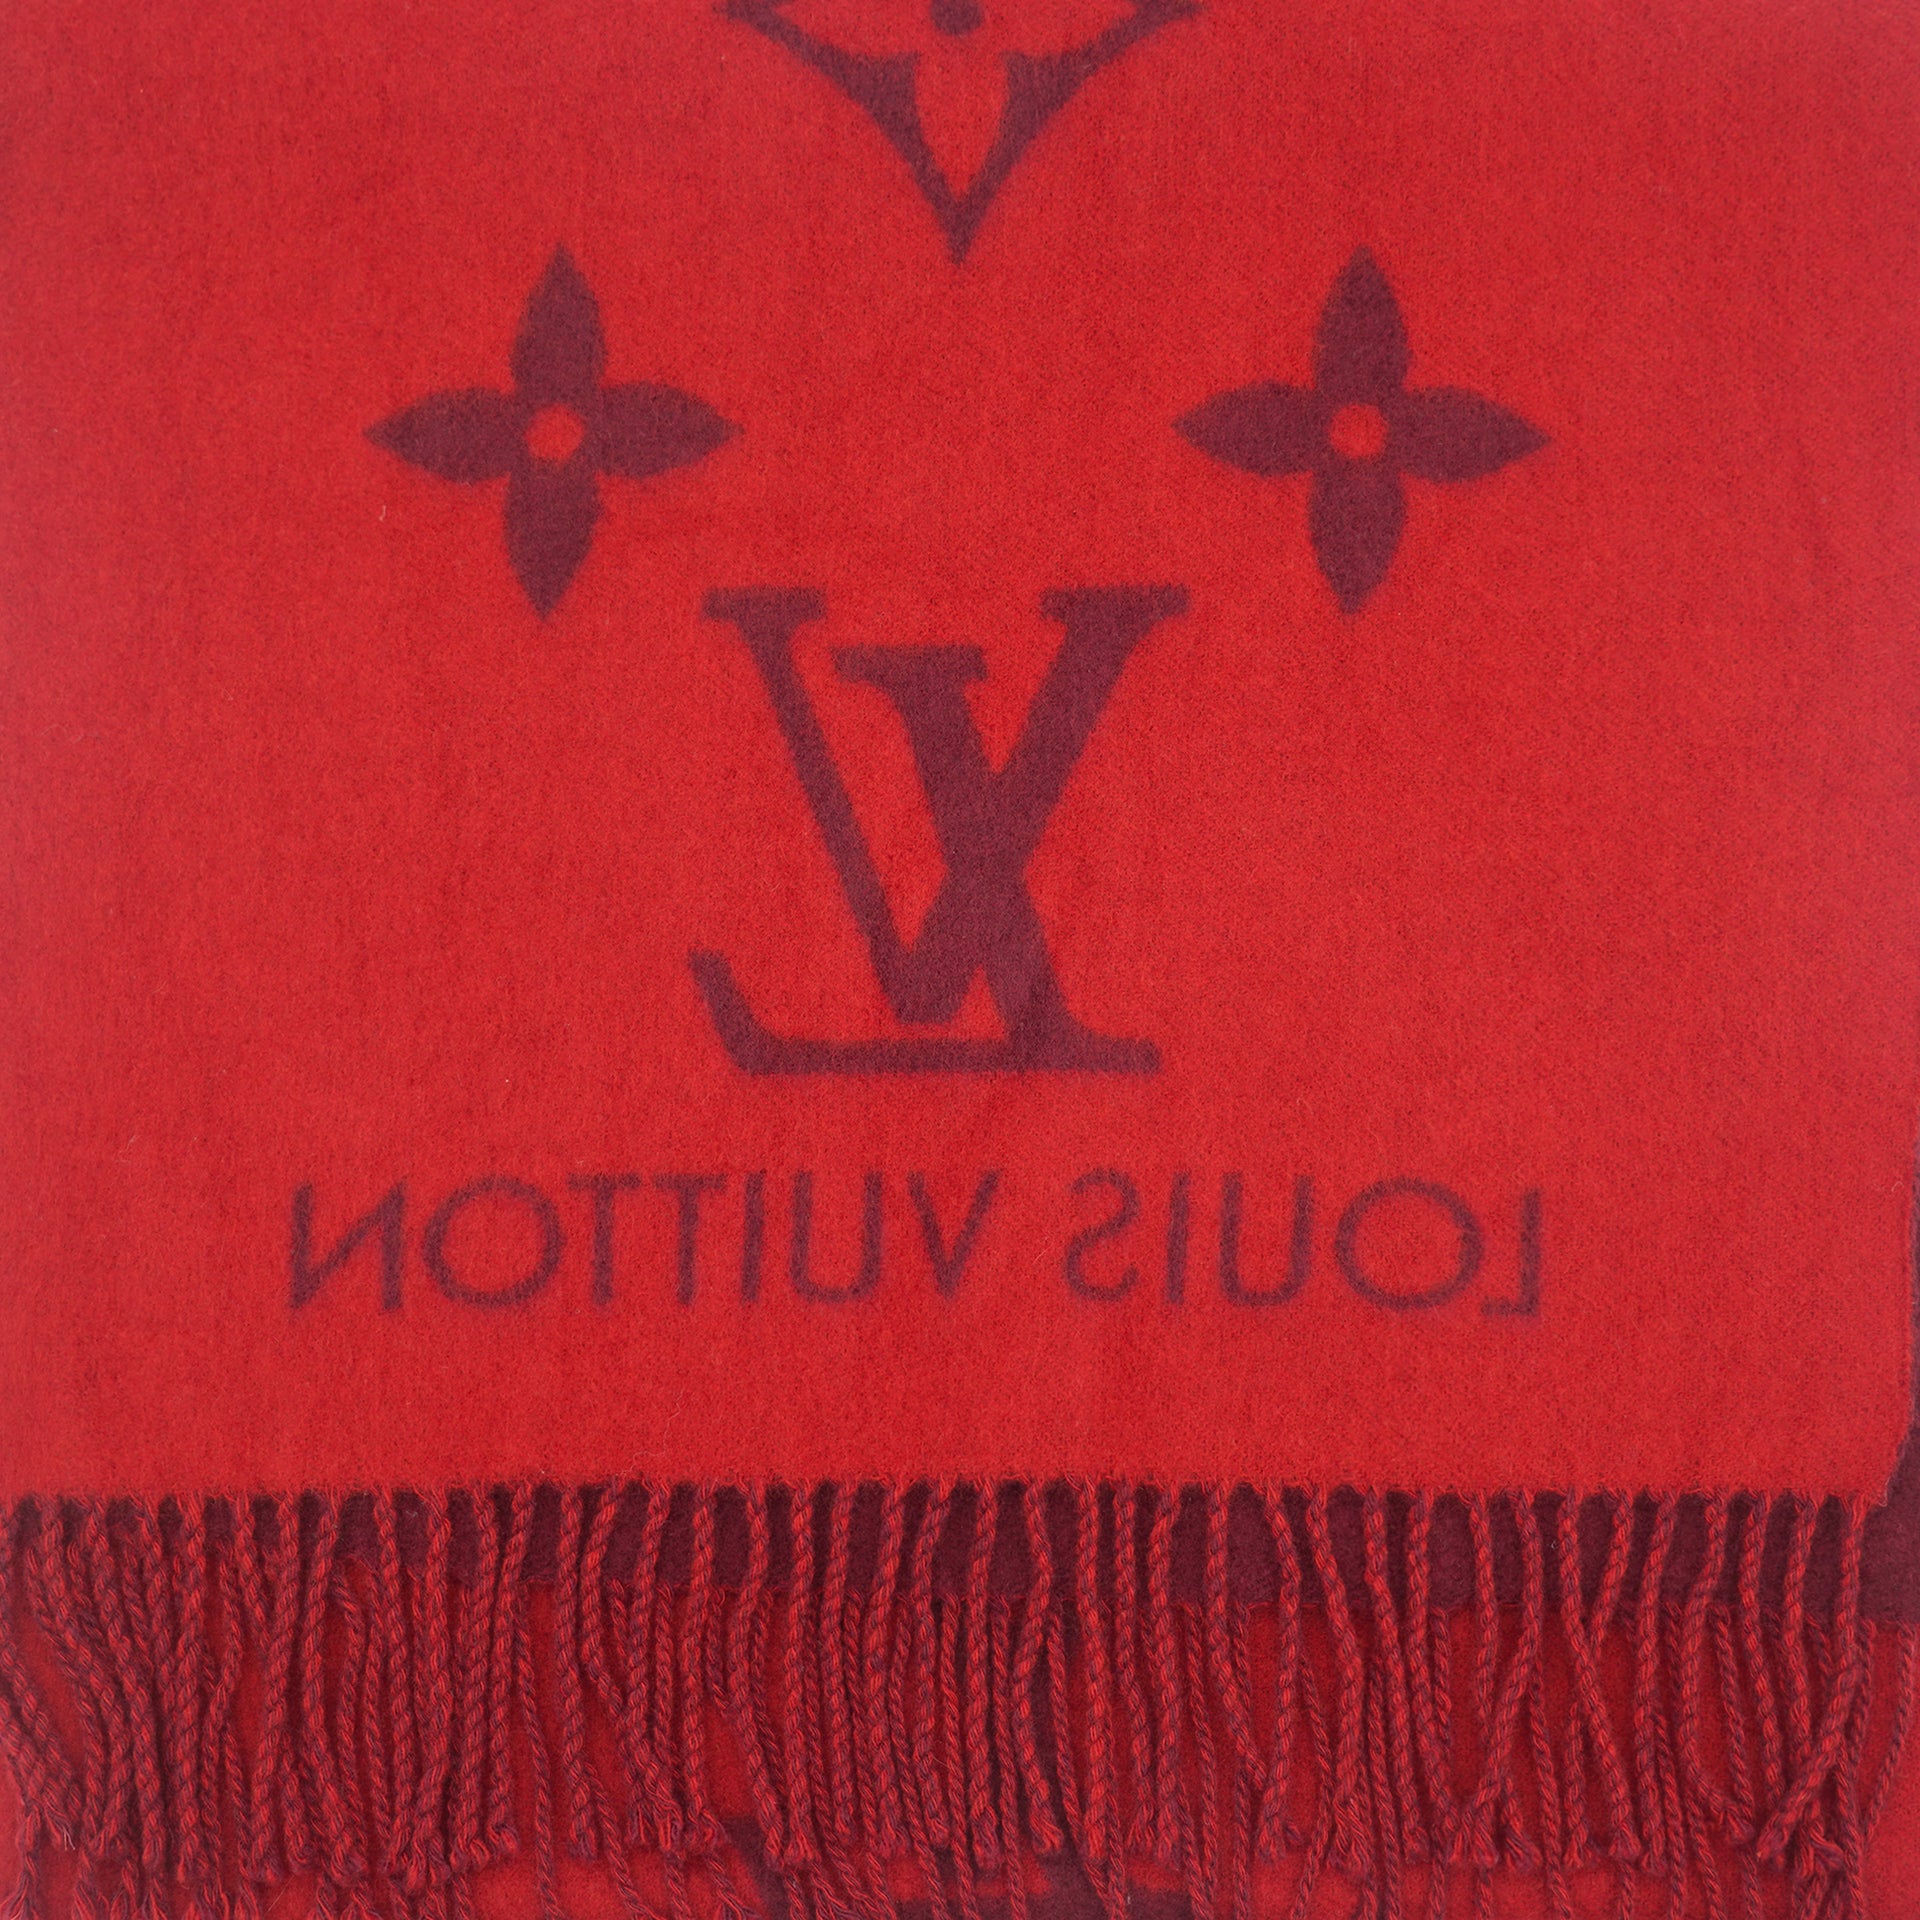 Louis Vuitton Red Cashmere Reykjavik Scarf Louis Vuitton